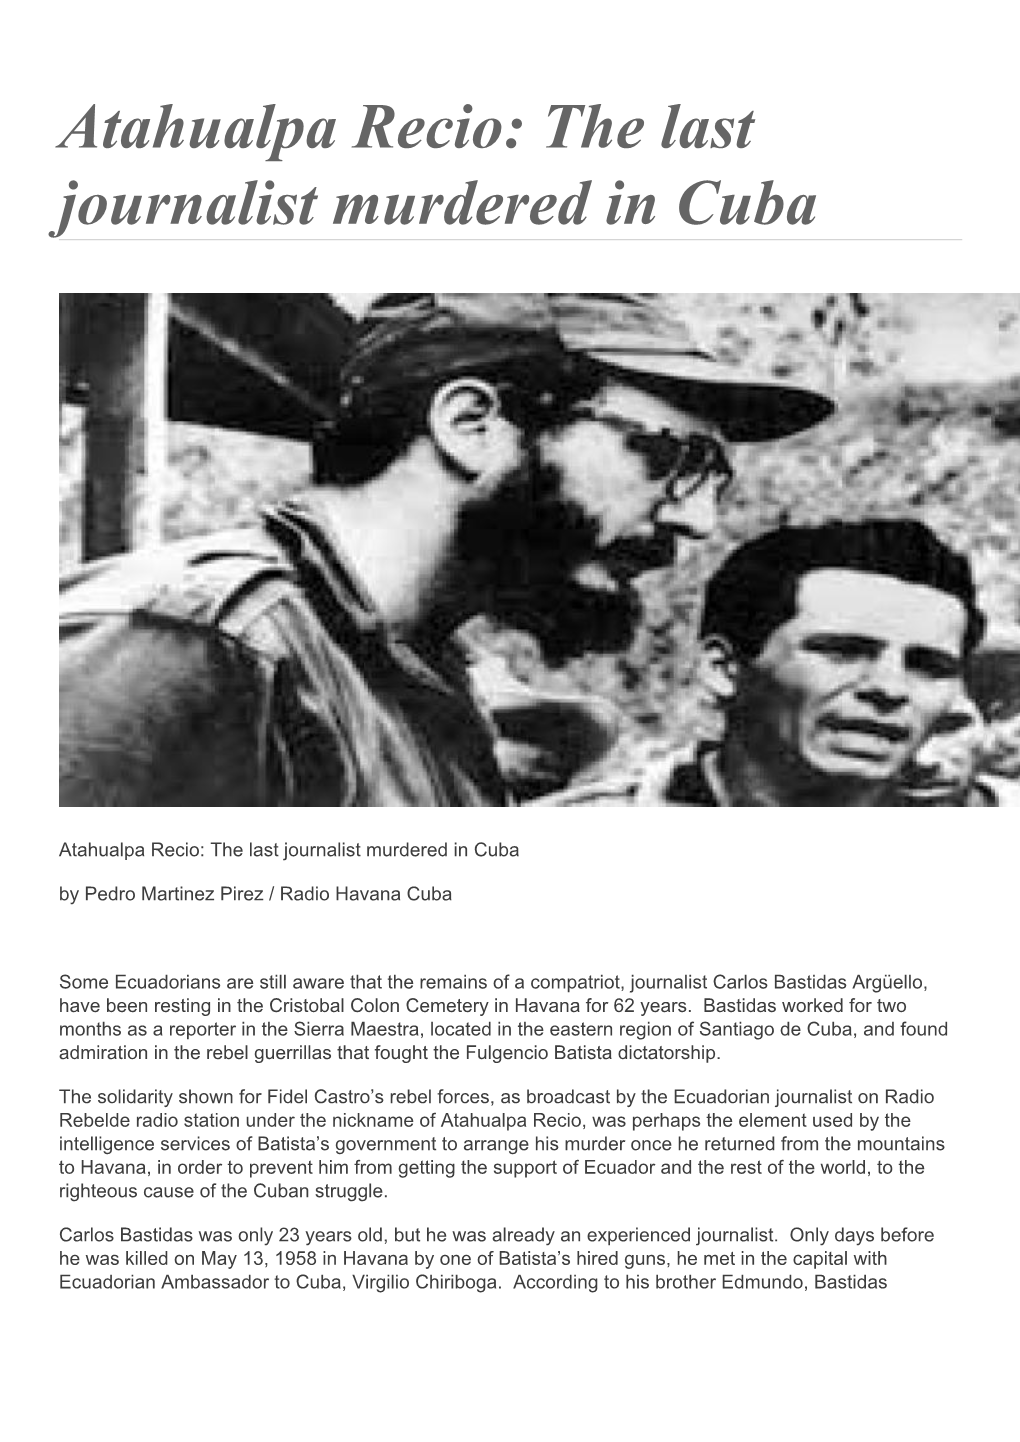 Atahualpa Recio: the Last Journalist Murdered in Cuba